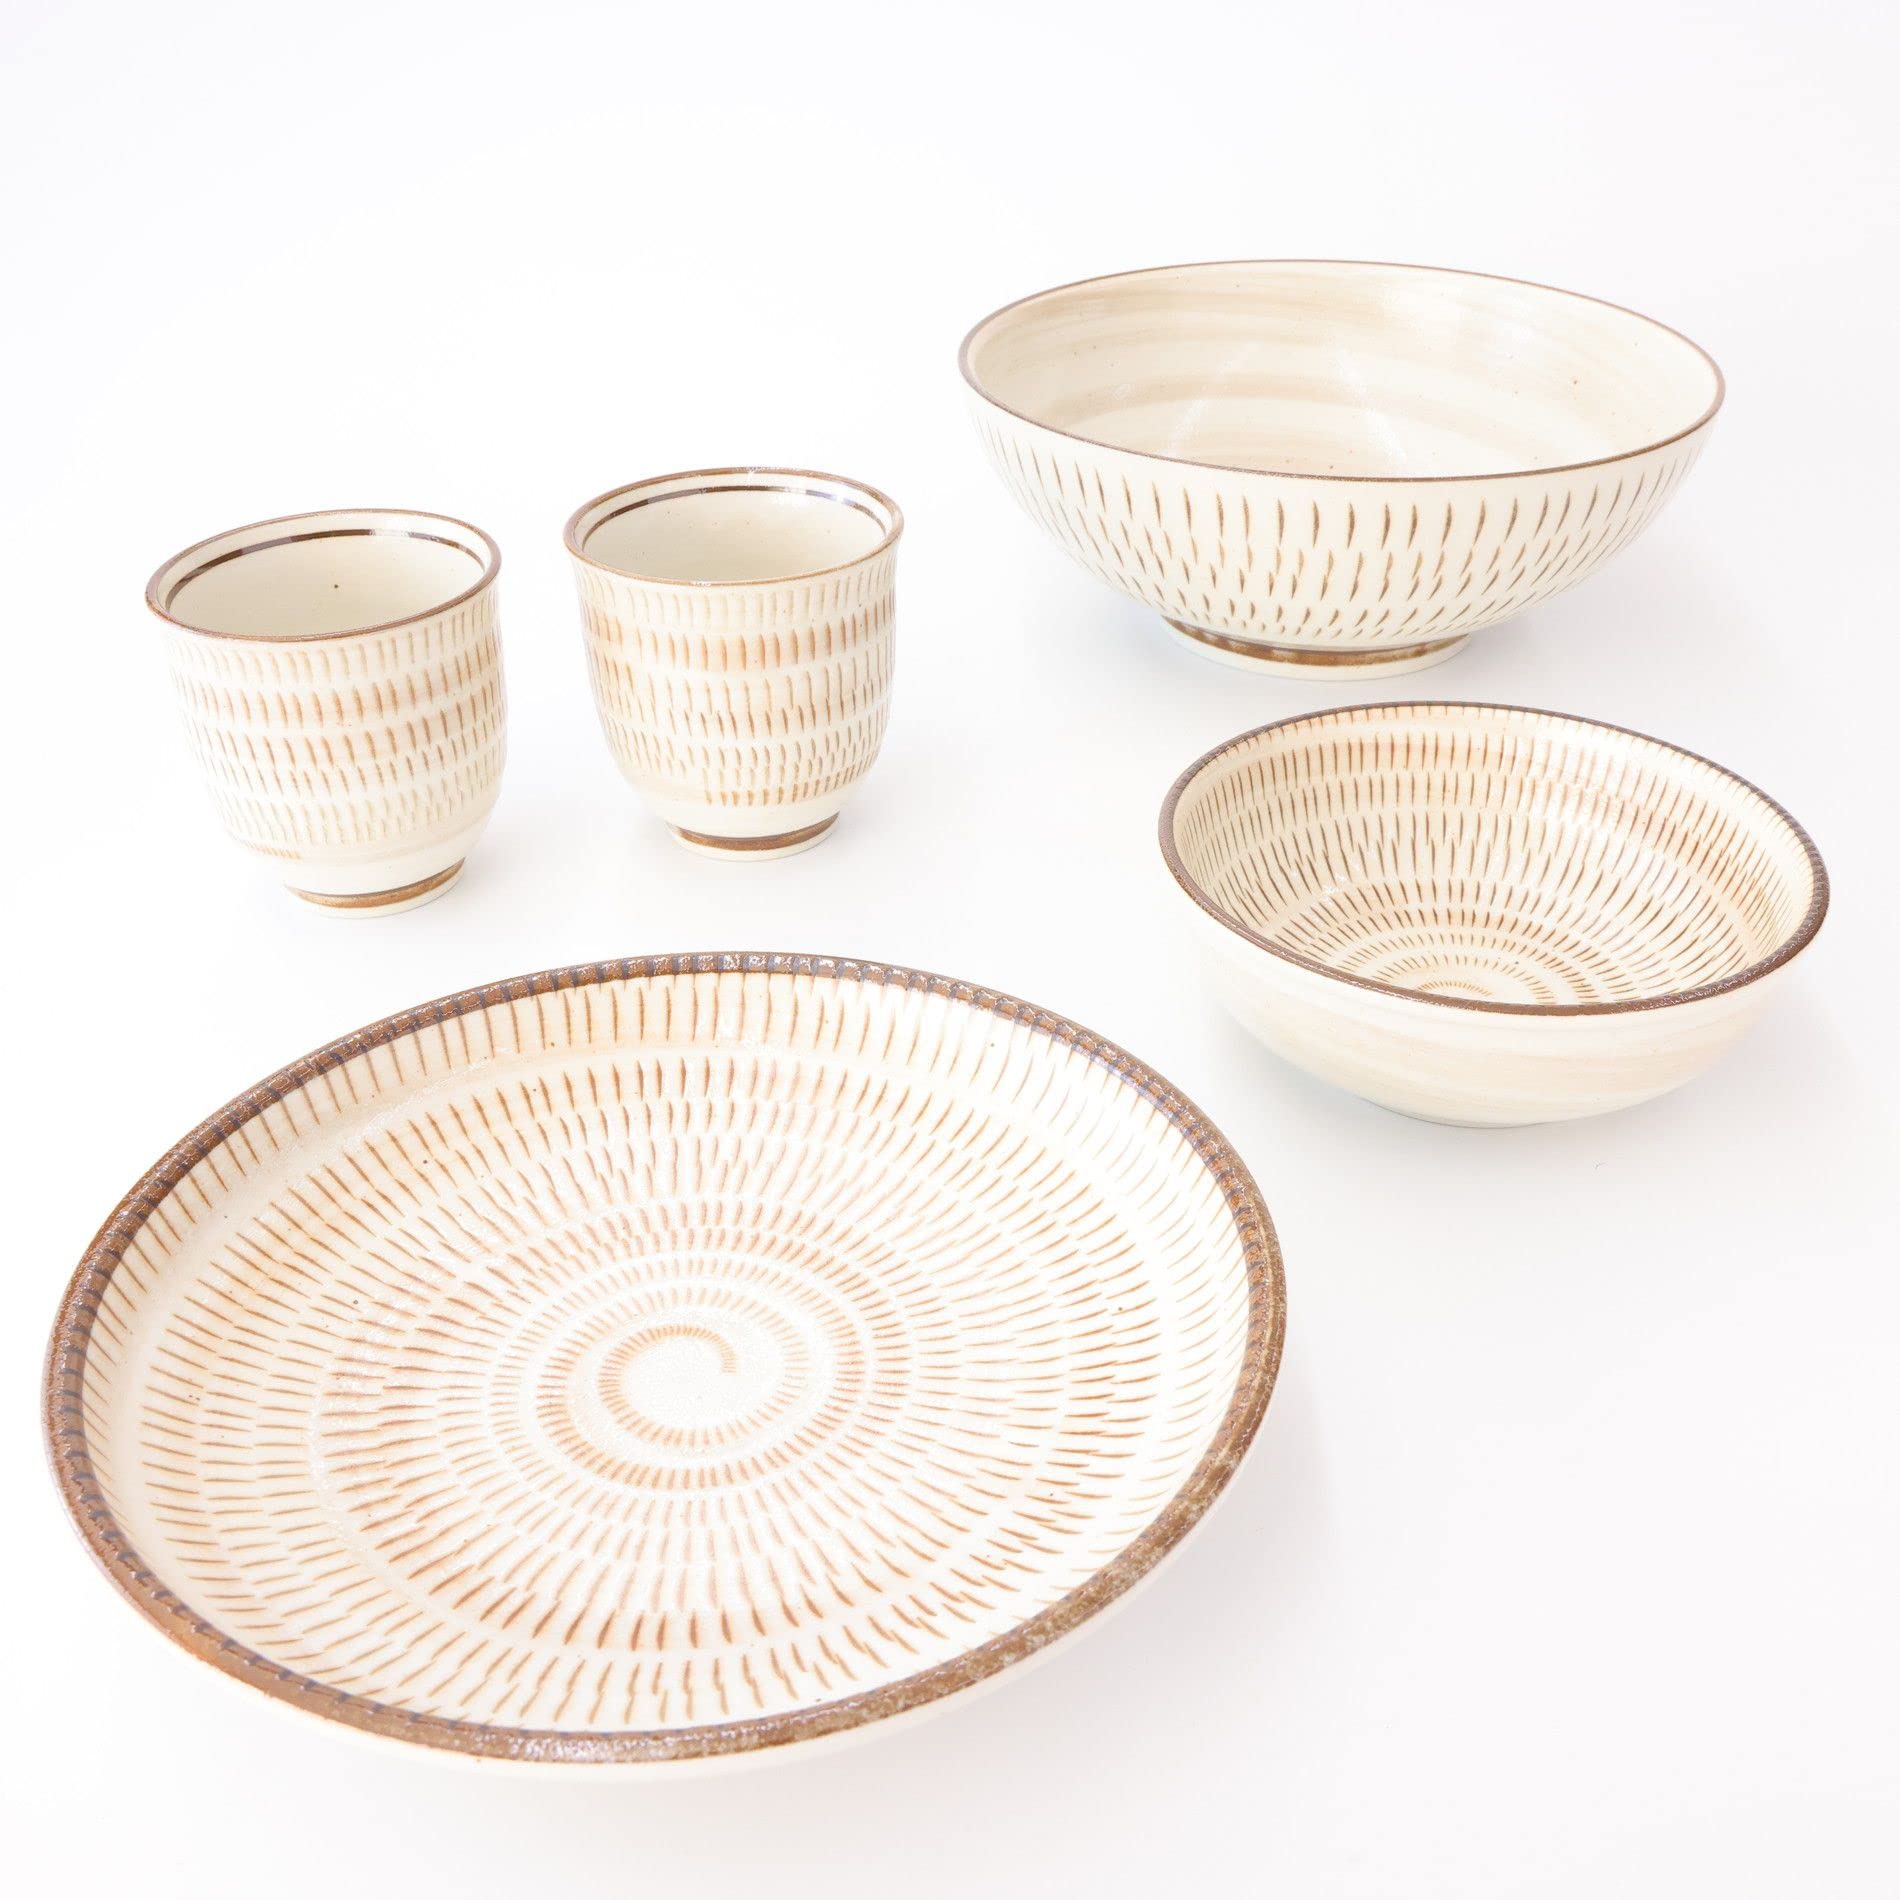 Mino Ware Serving Bowl, 5.2 inch, Beige, Mino-Mingei, Japanese Ceramic Soup/Salad Bowl, Microwave/Dishwasher Safe